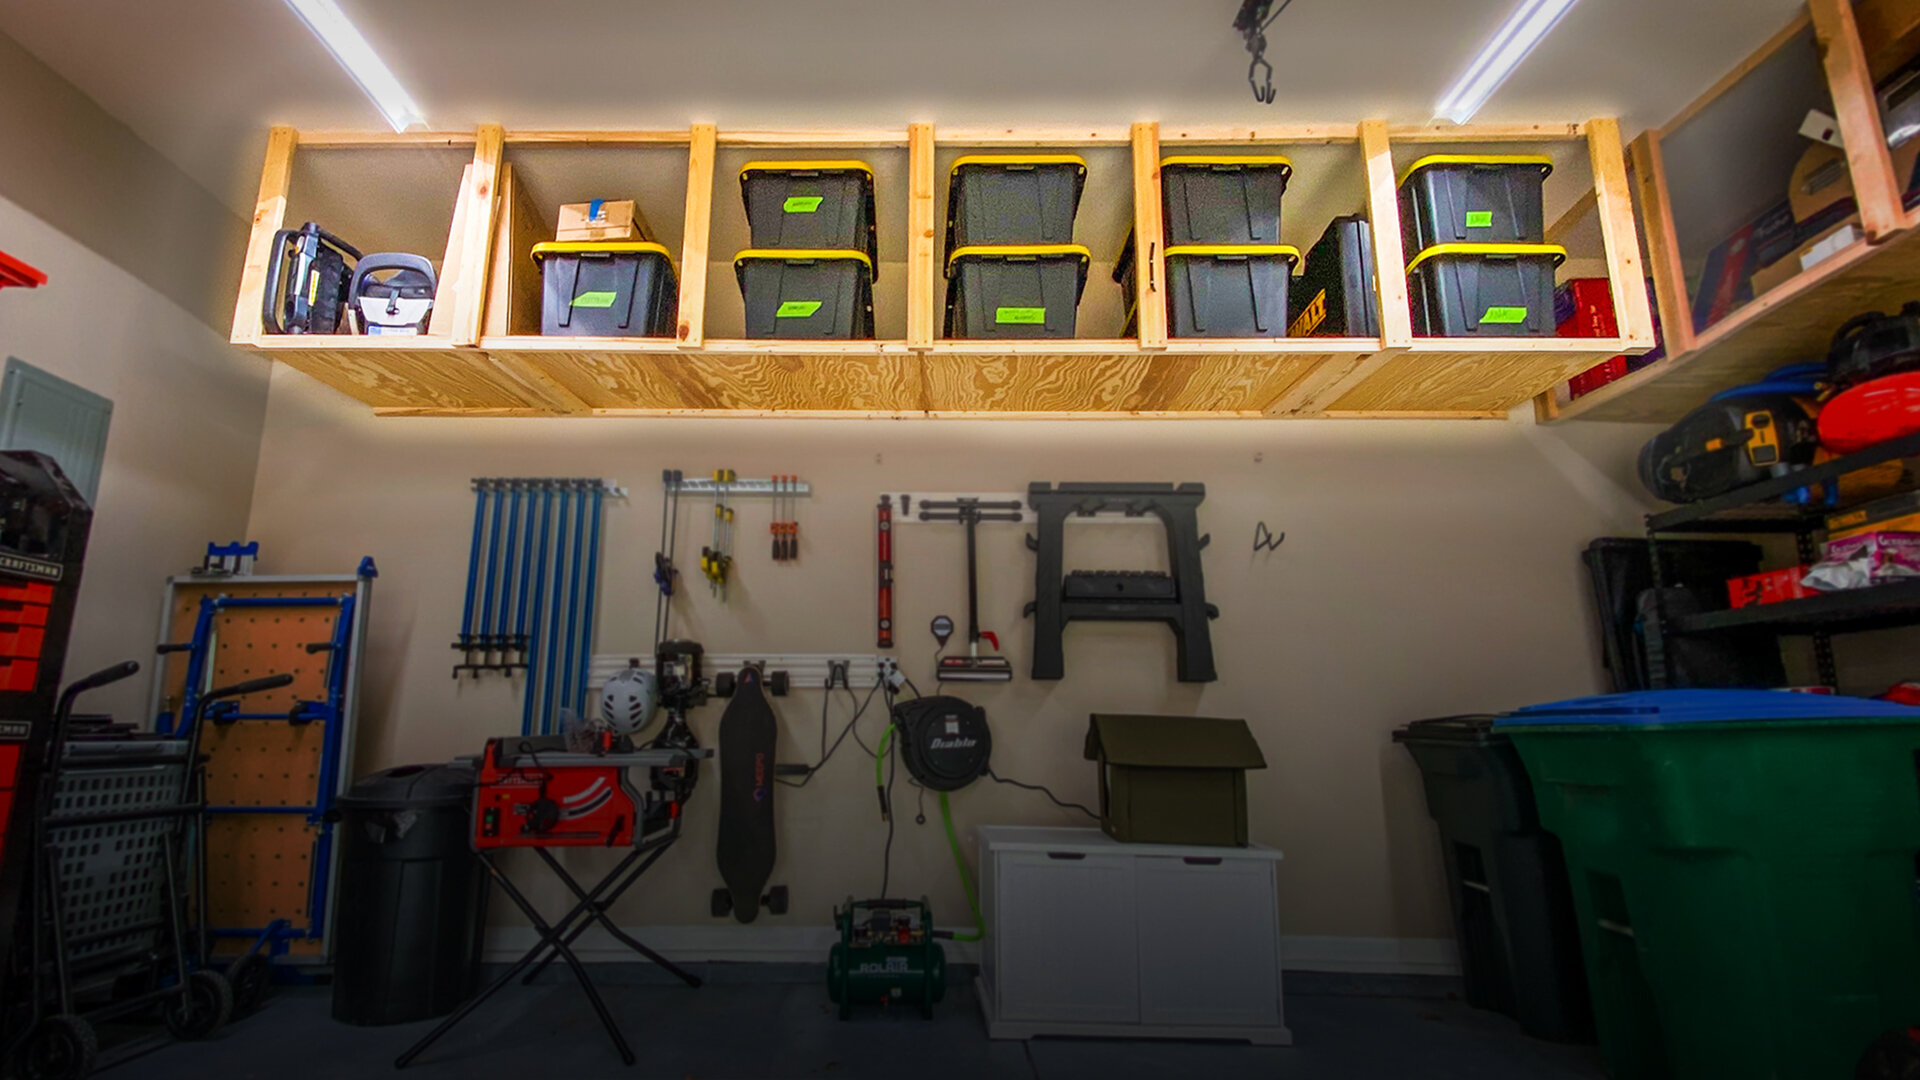 How To Build Diy Garage Storage Shelves, How To Build Hanging Storage Shelves For Garage